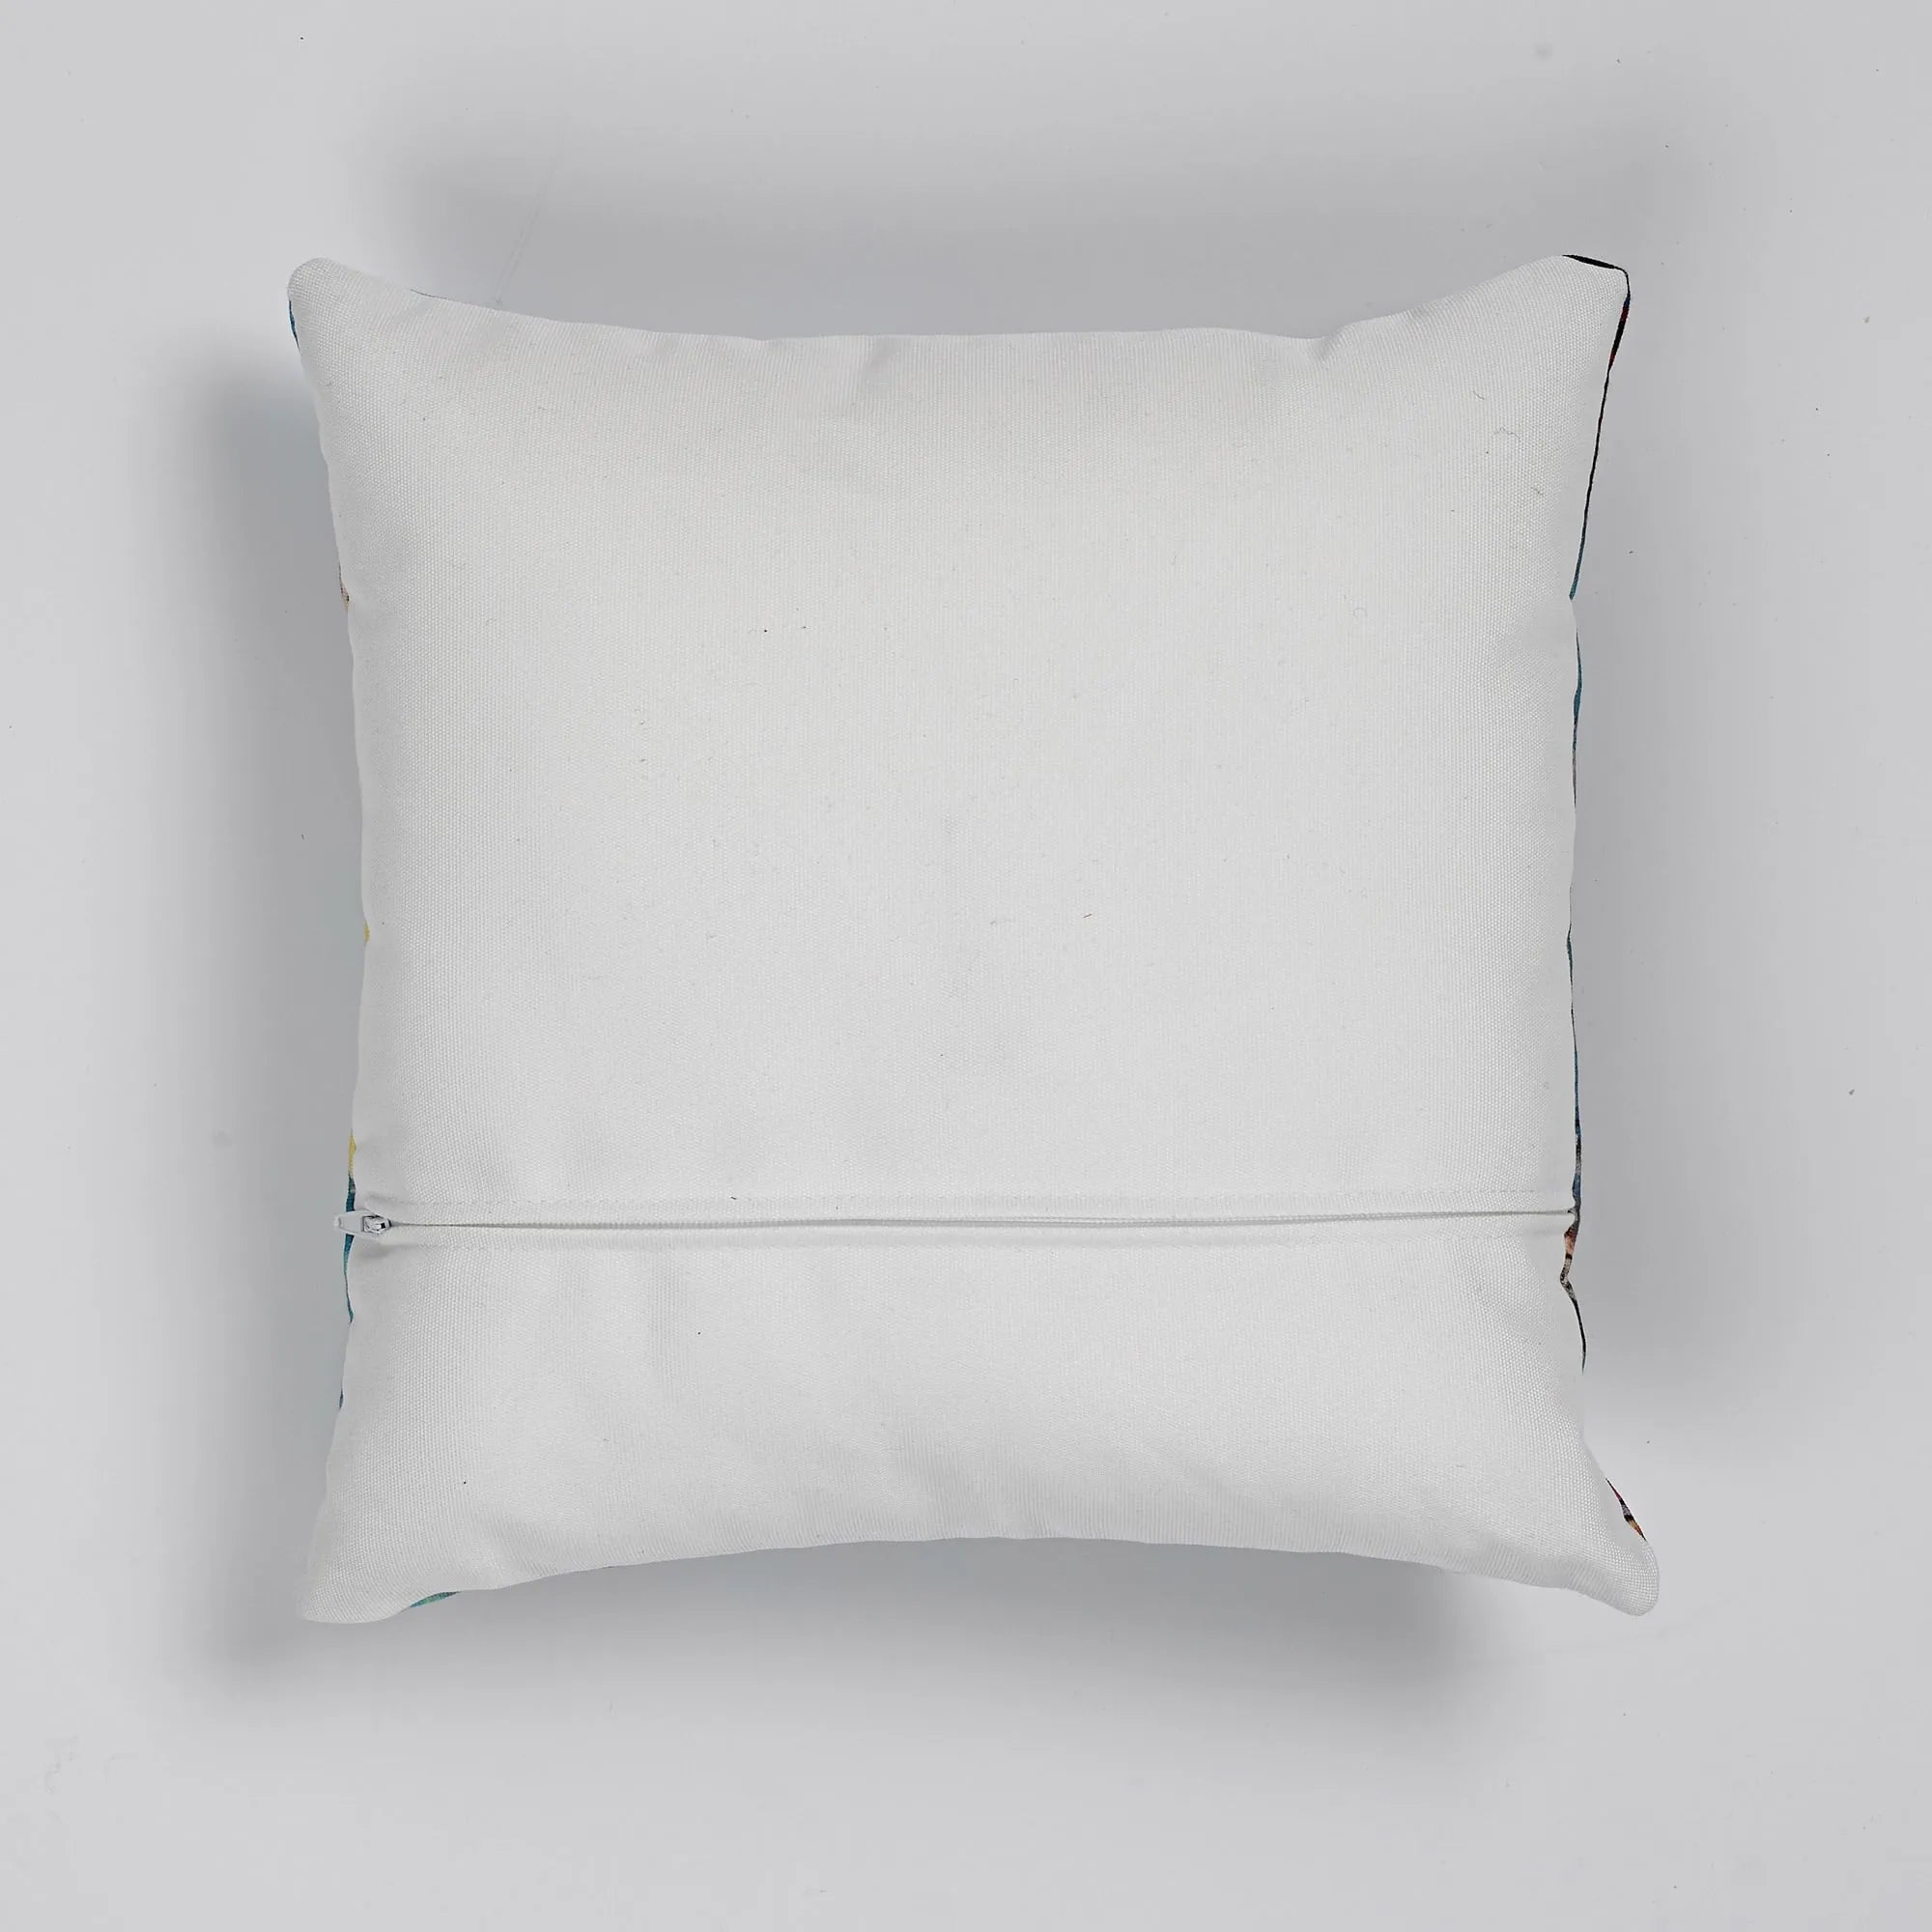 Holland Park Carpet - William Morris Cushion - Decorative Throw Pillow - Throw Pillows - Aesthetic Art